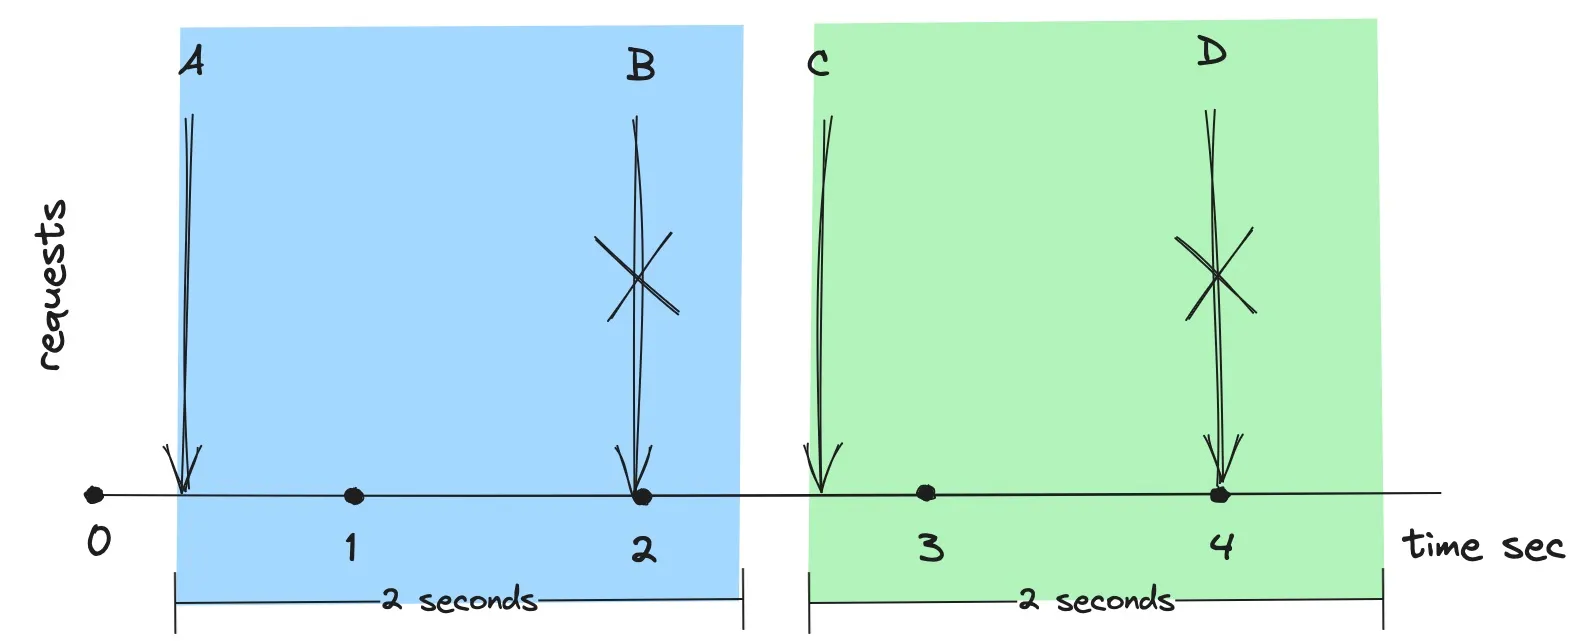 Figure 1. Fixed Window Algorithm in Action